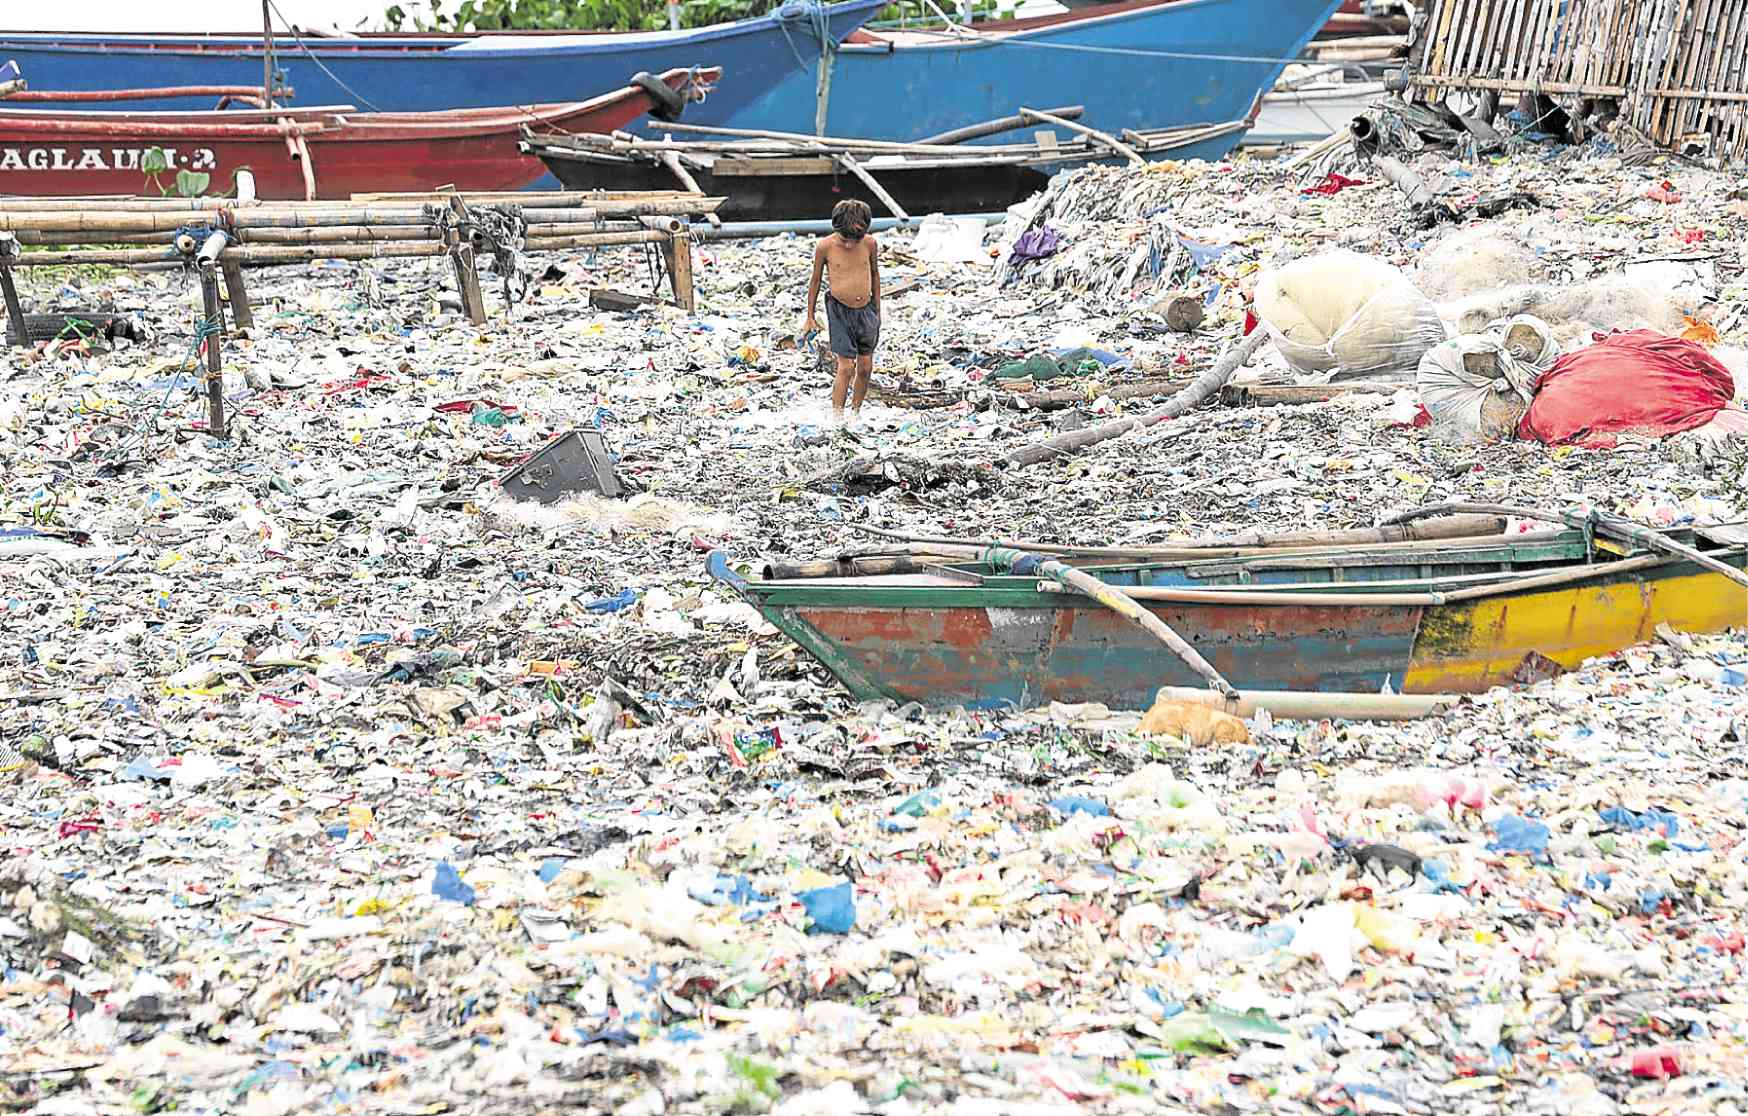 Pinoys’ daily plastic waste: 163 million sachets, 3 million diapers